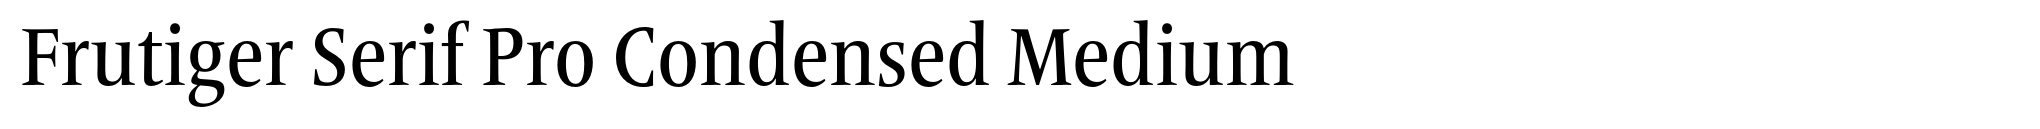 Frutiger Serif Pro Condensed Medium image